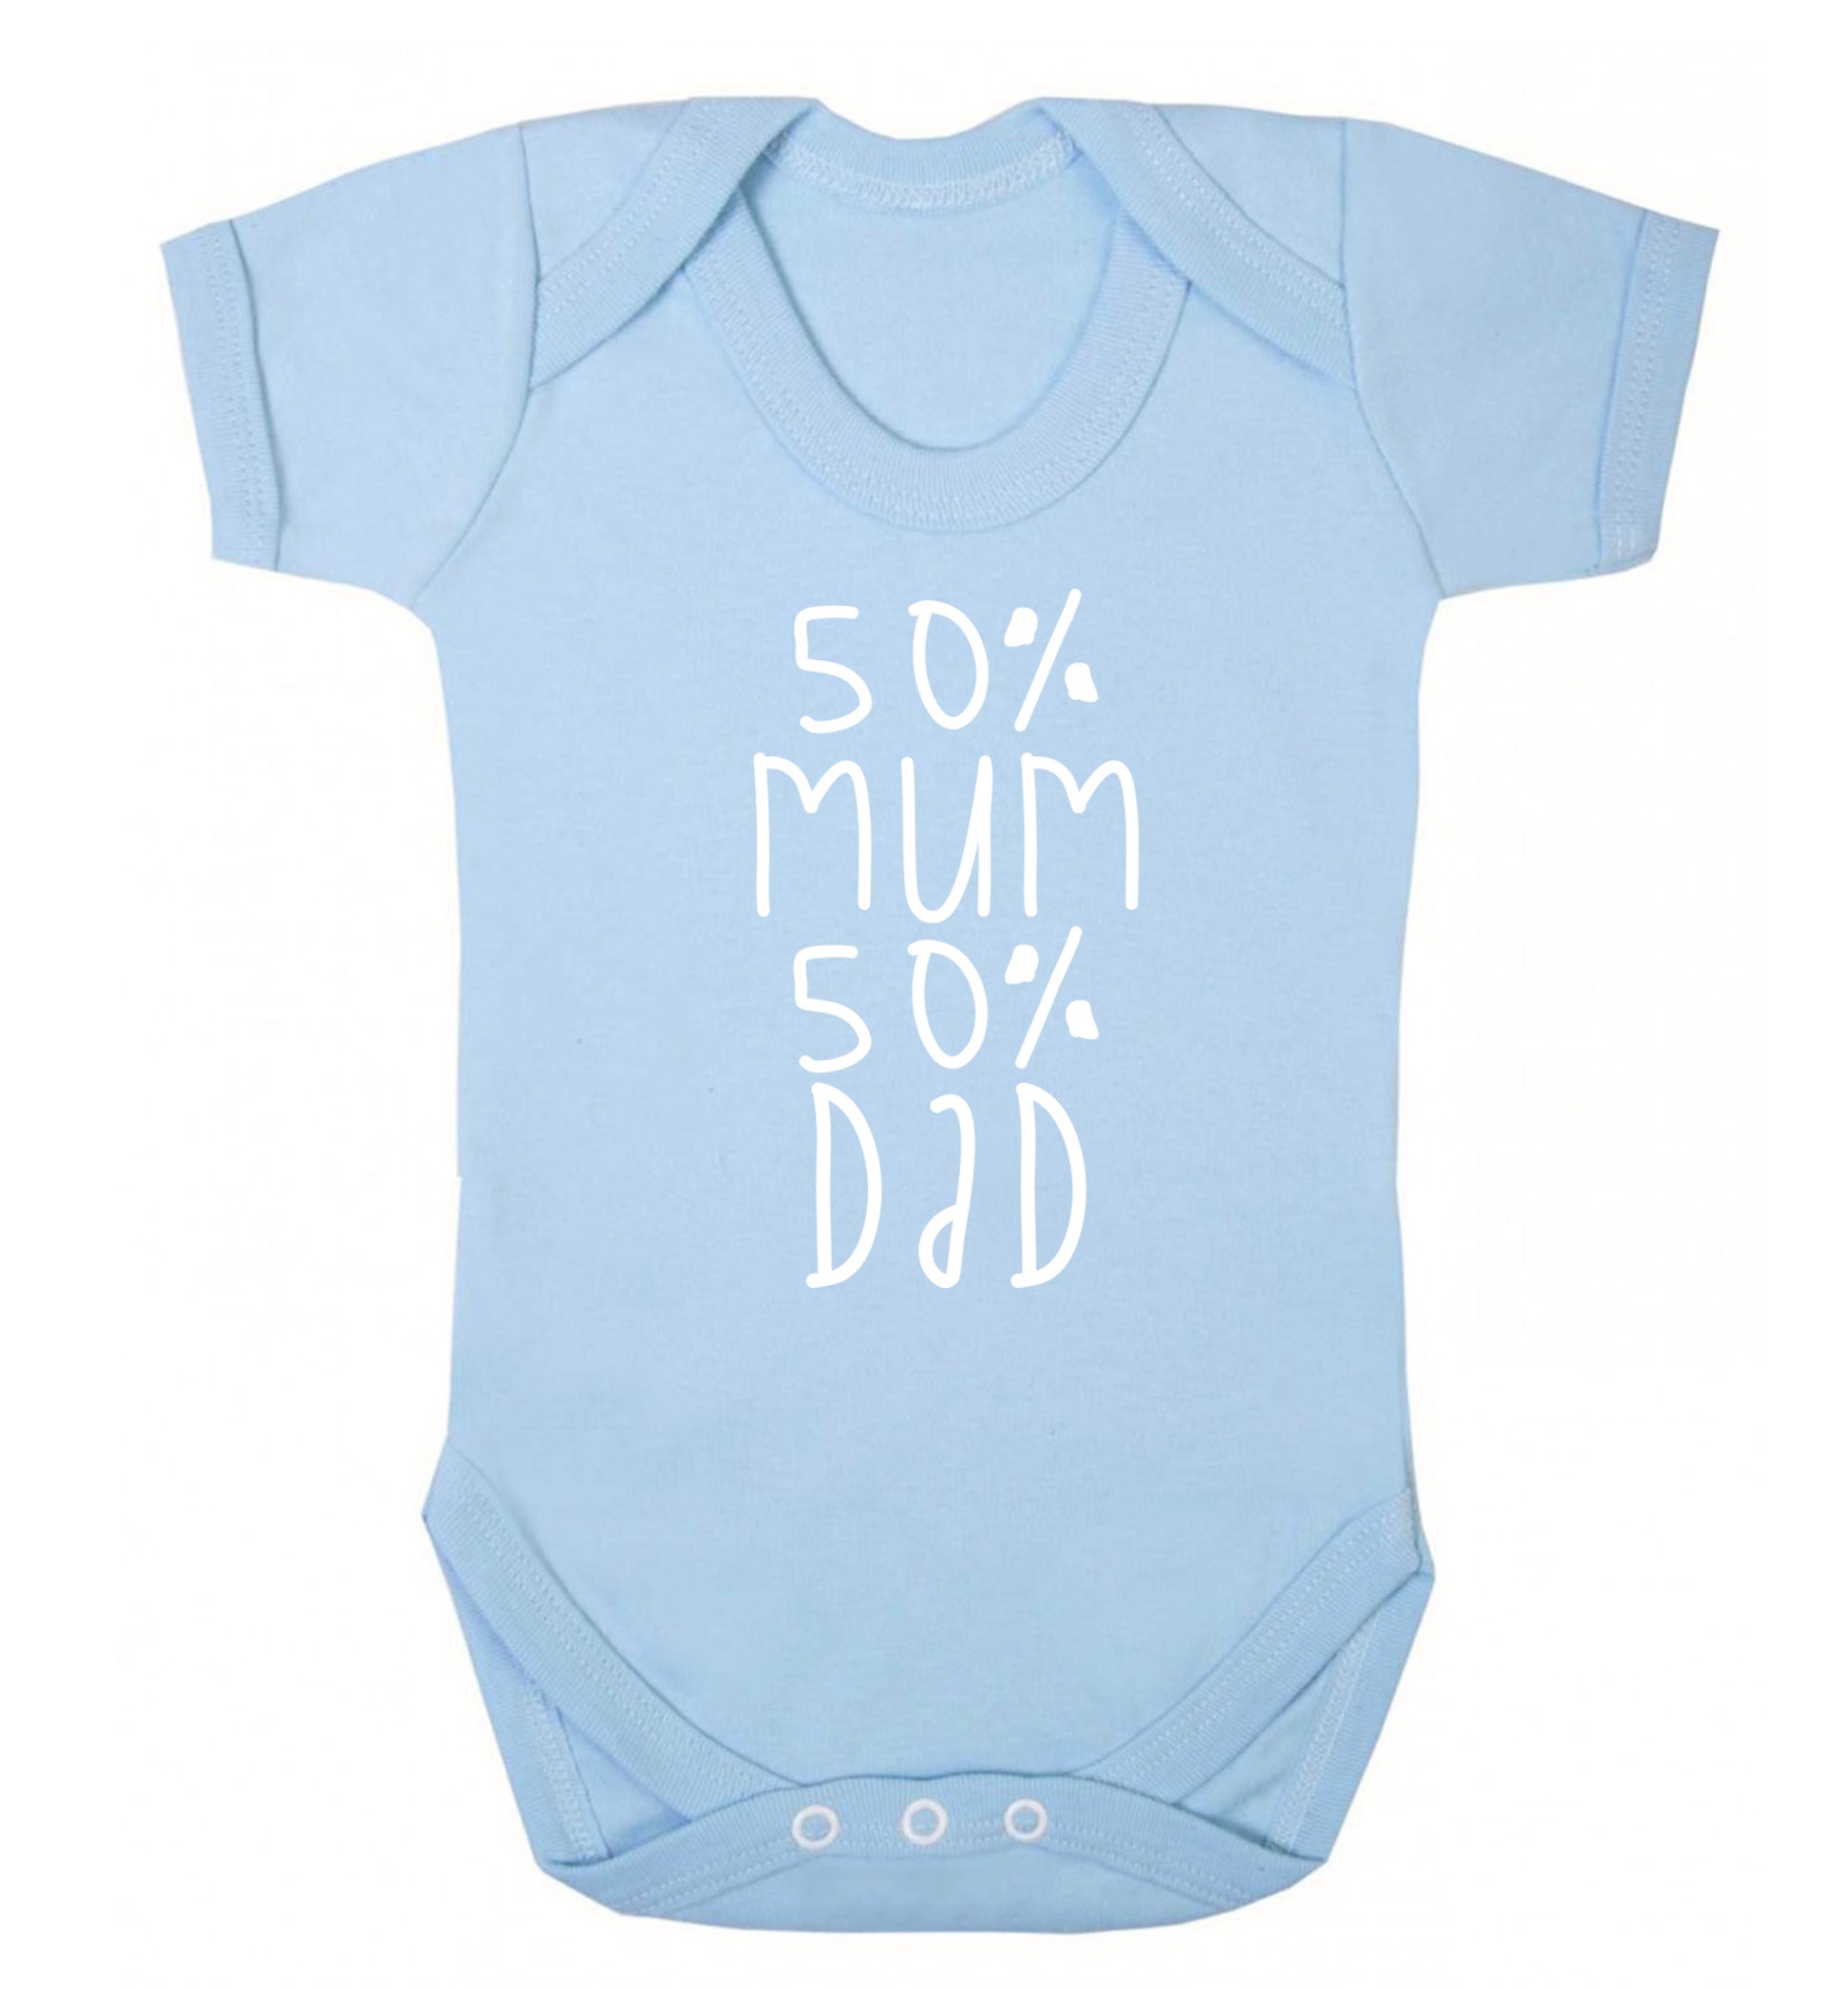 50% mum 50% dad Baby Vest pale blue 18-24 months